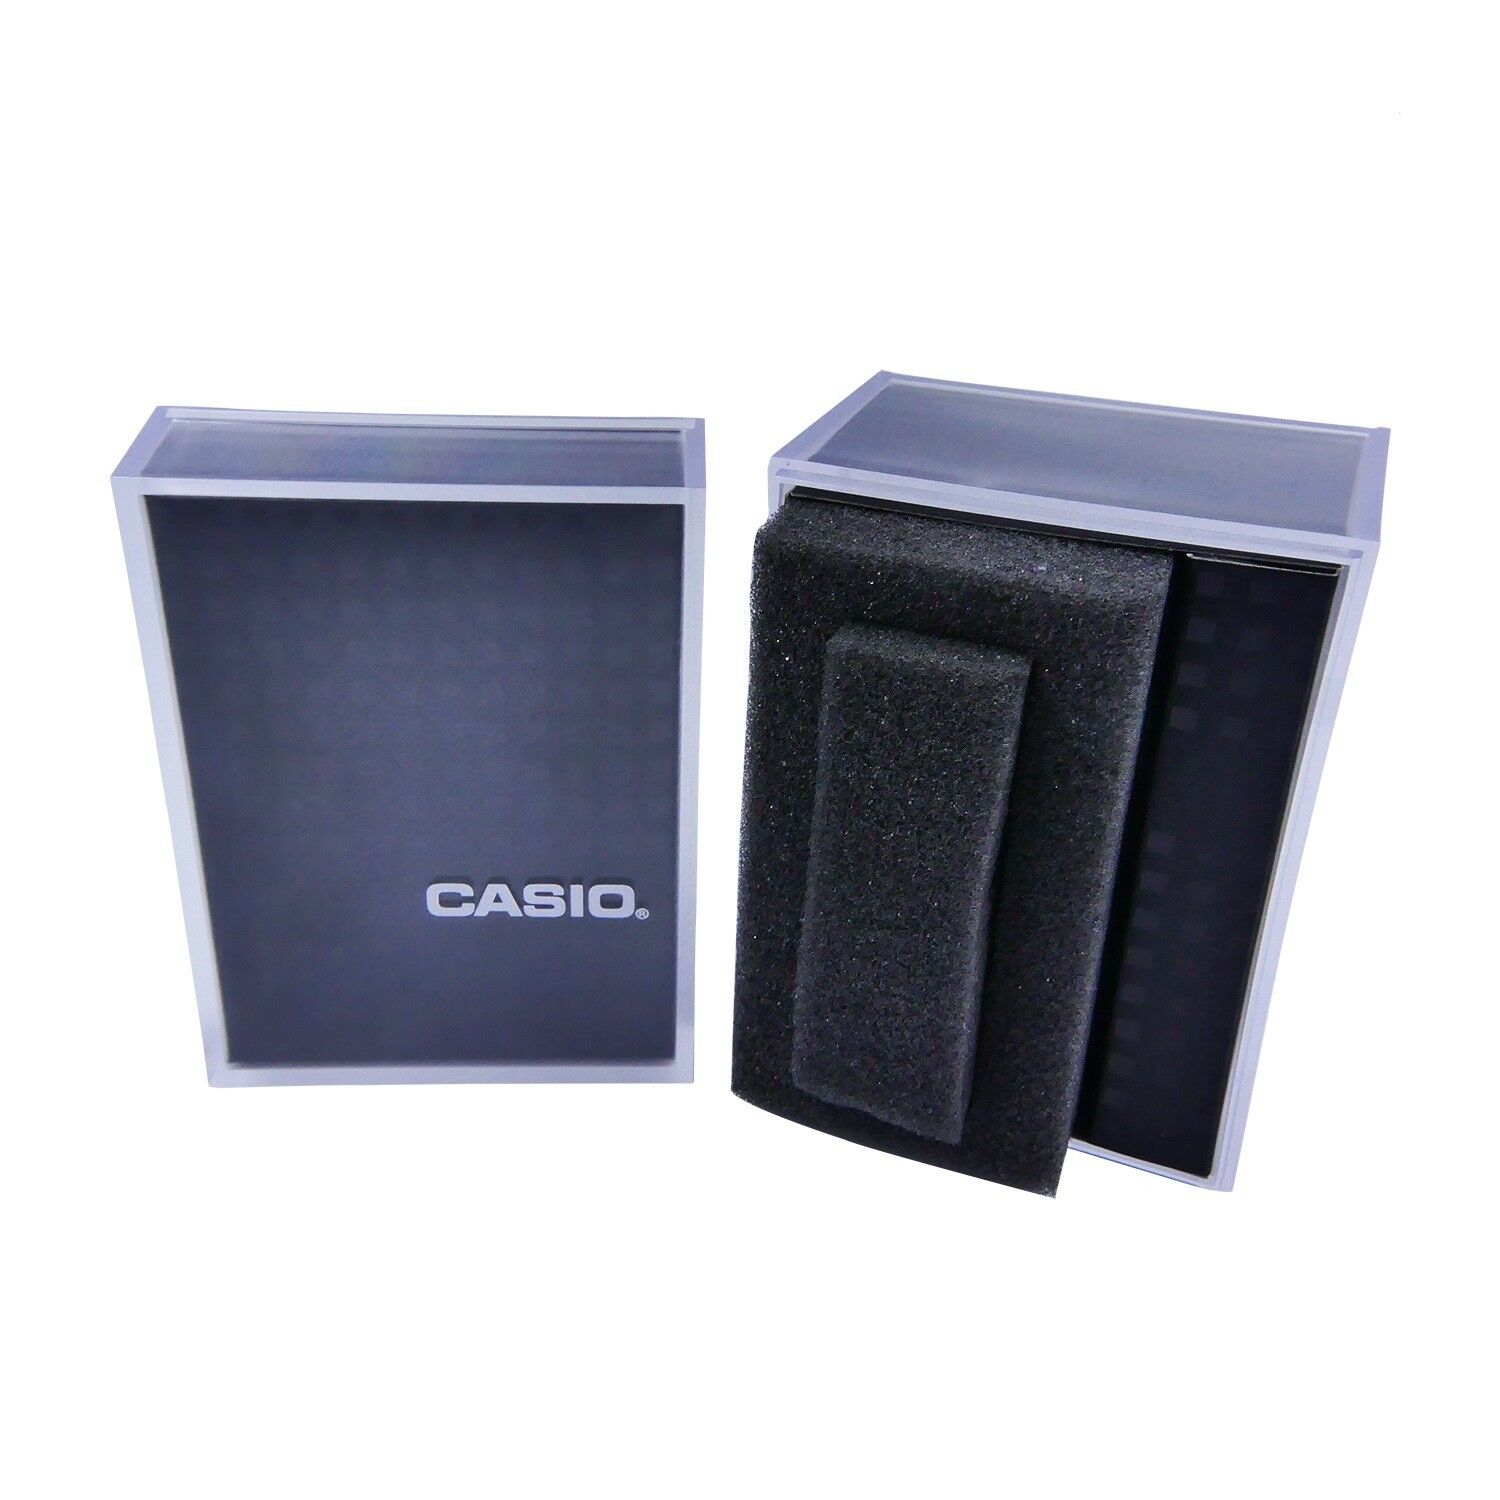 New! Casio Edifice Leather Strap Blue EFV-520L-2AVUEF Mens Watch